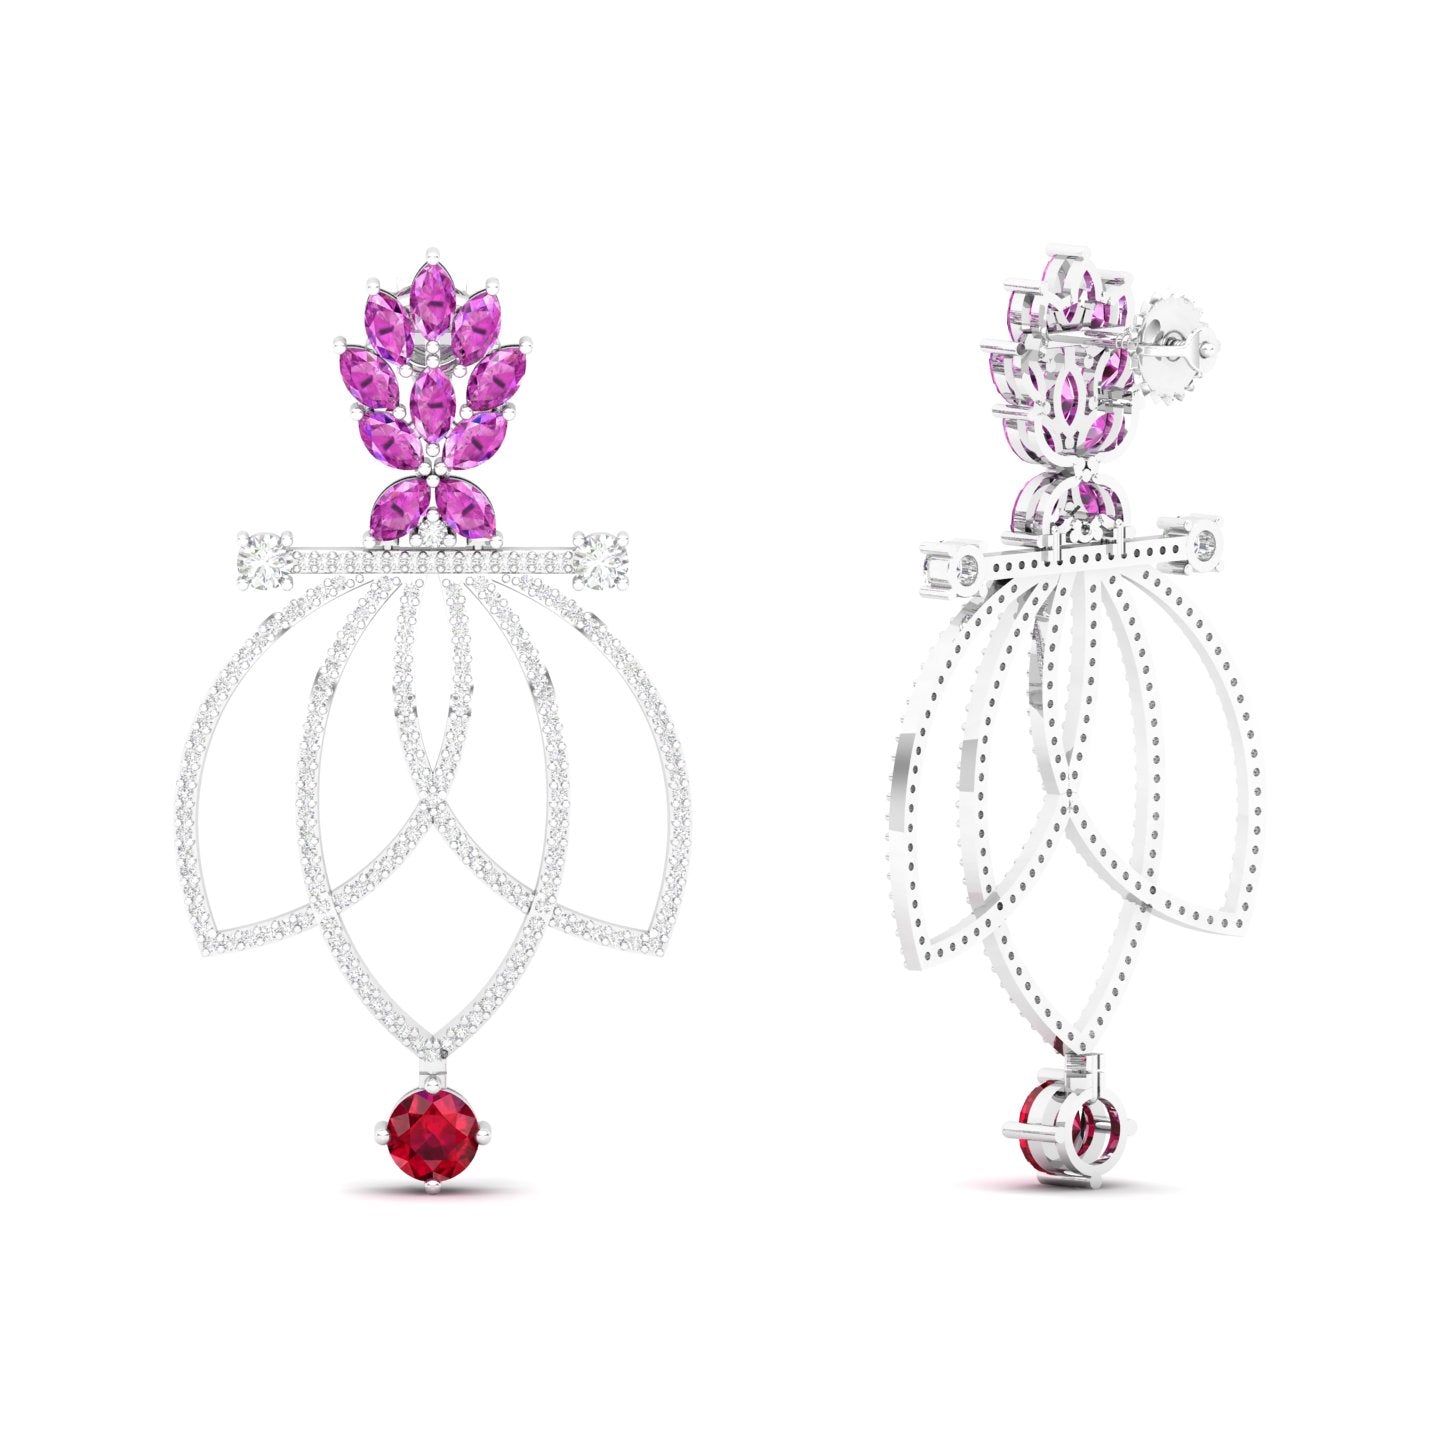 Maurya Lois Ruby and Pink Amethyst Chandelier Dangle Earrings with Diamond